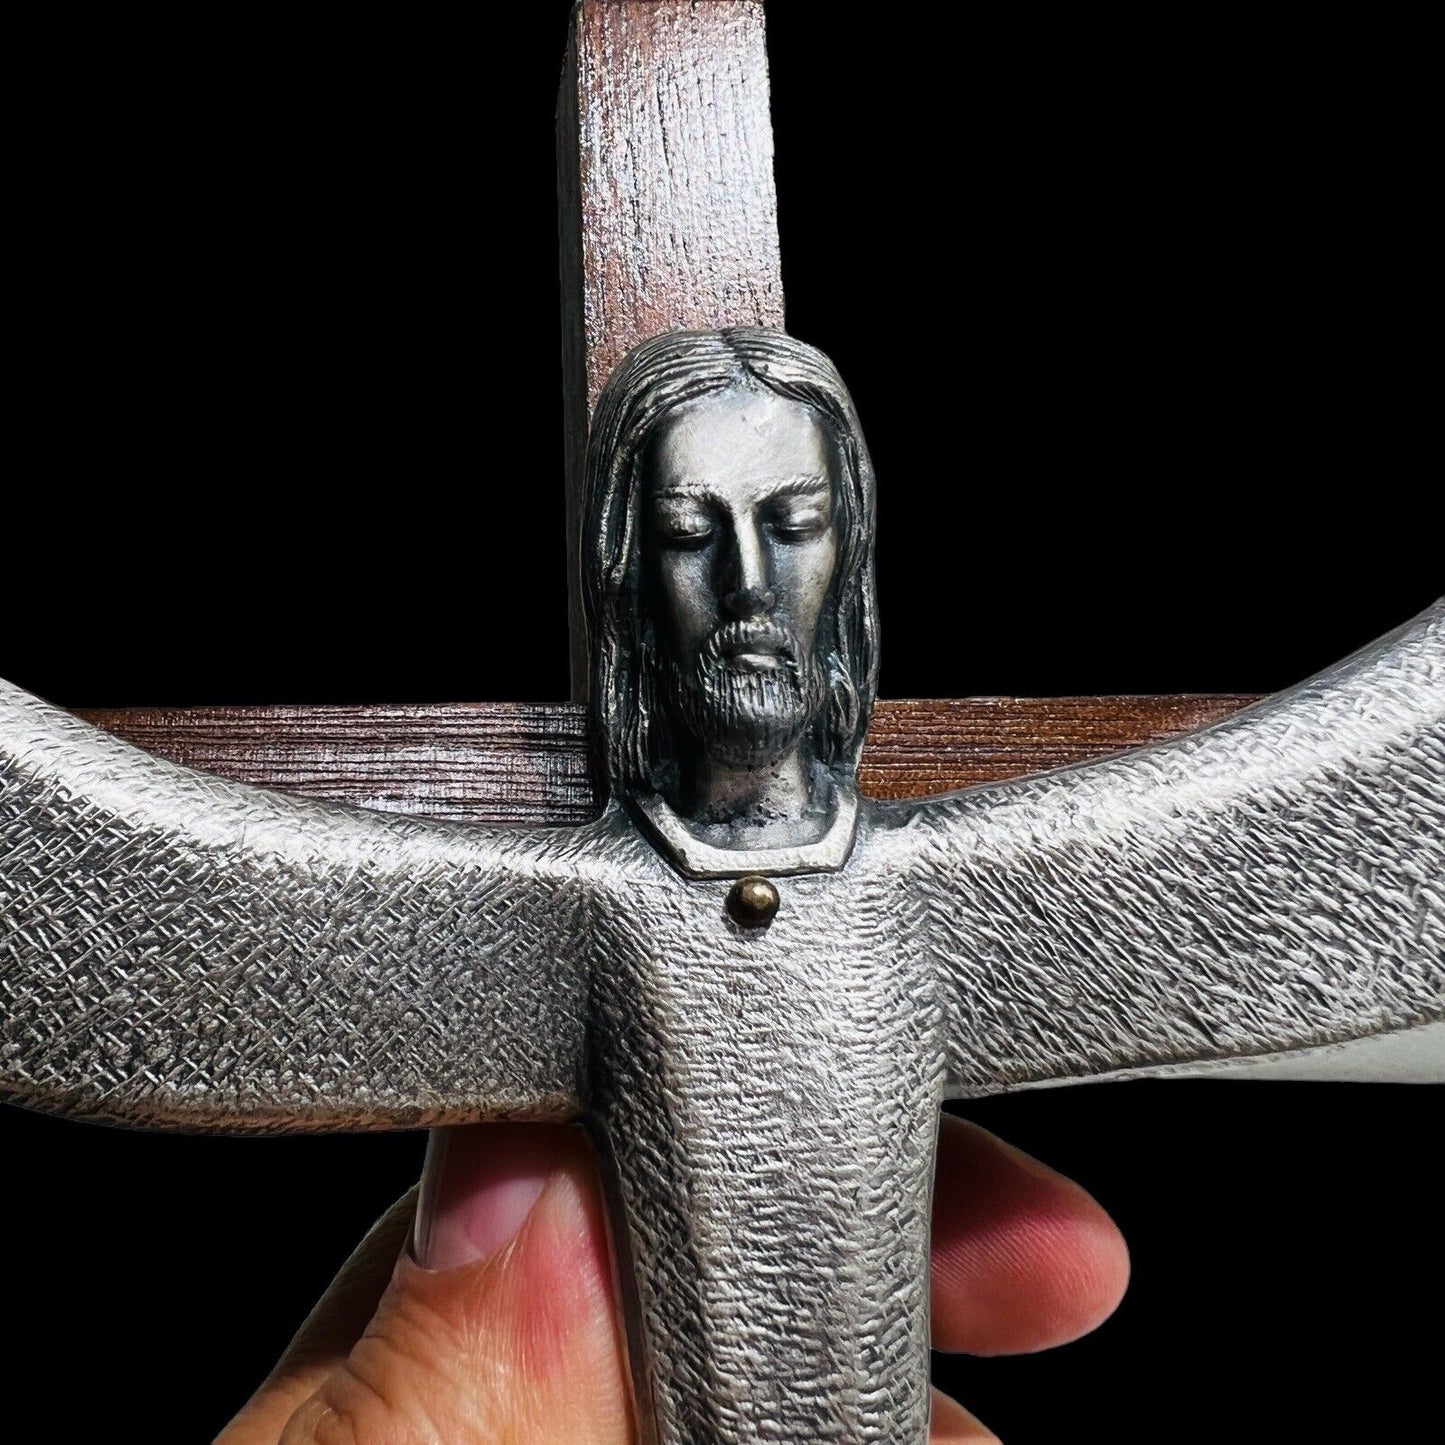 Cross Crucifix Walnut Wood Silver Toned Pewter Risen Christ Corpus Christian